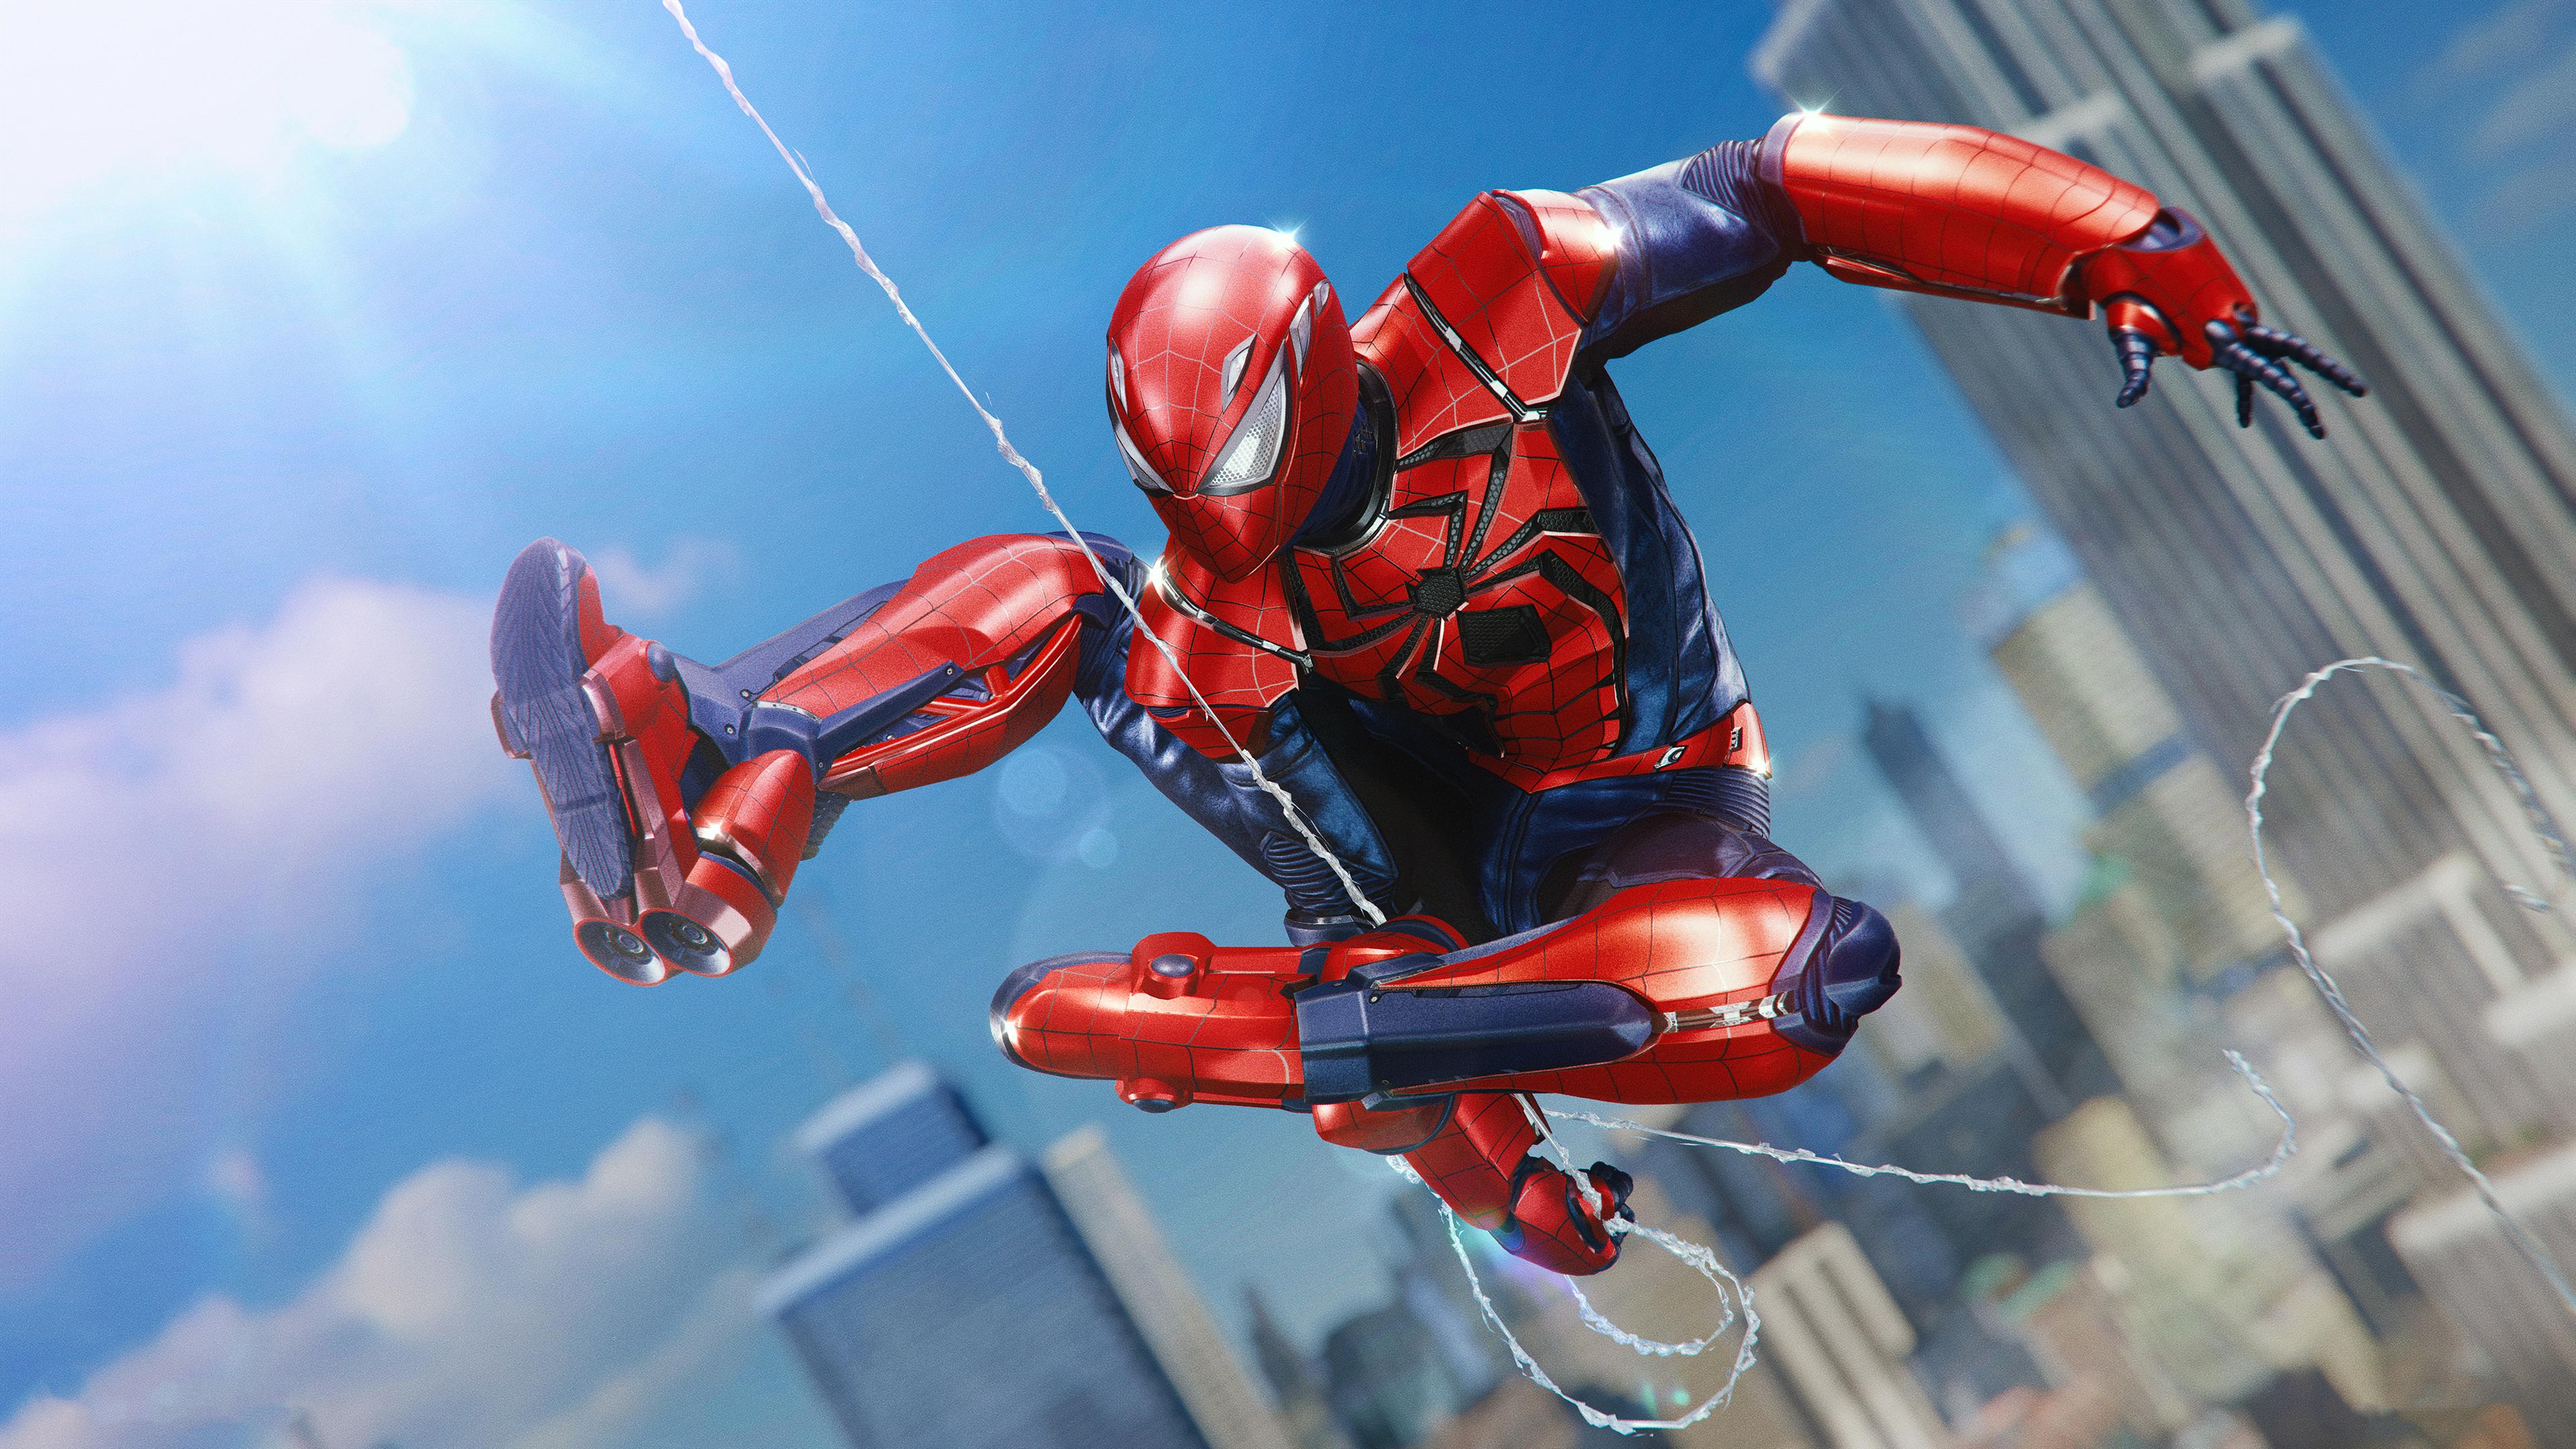 Spider-Man (PS4) 1080P, 2K, 4K, 5K HD wallpapers free download